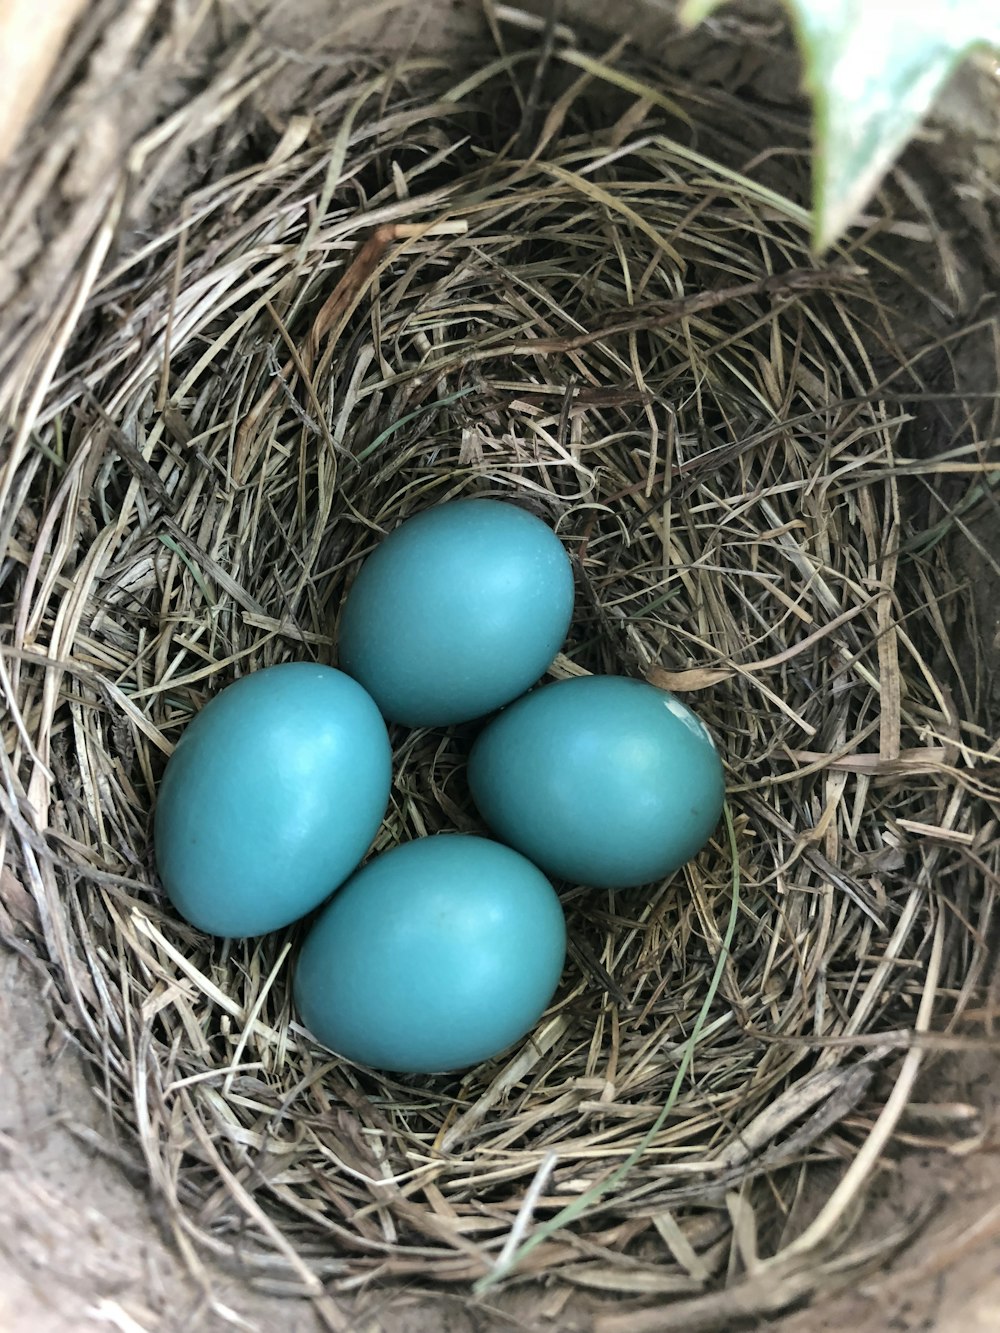 quattro uova blu sul nido